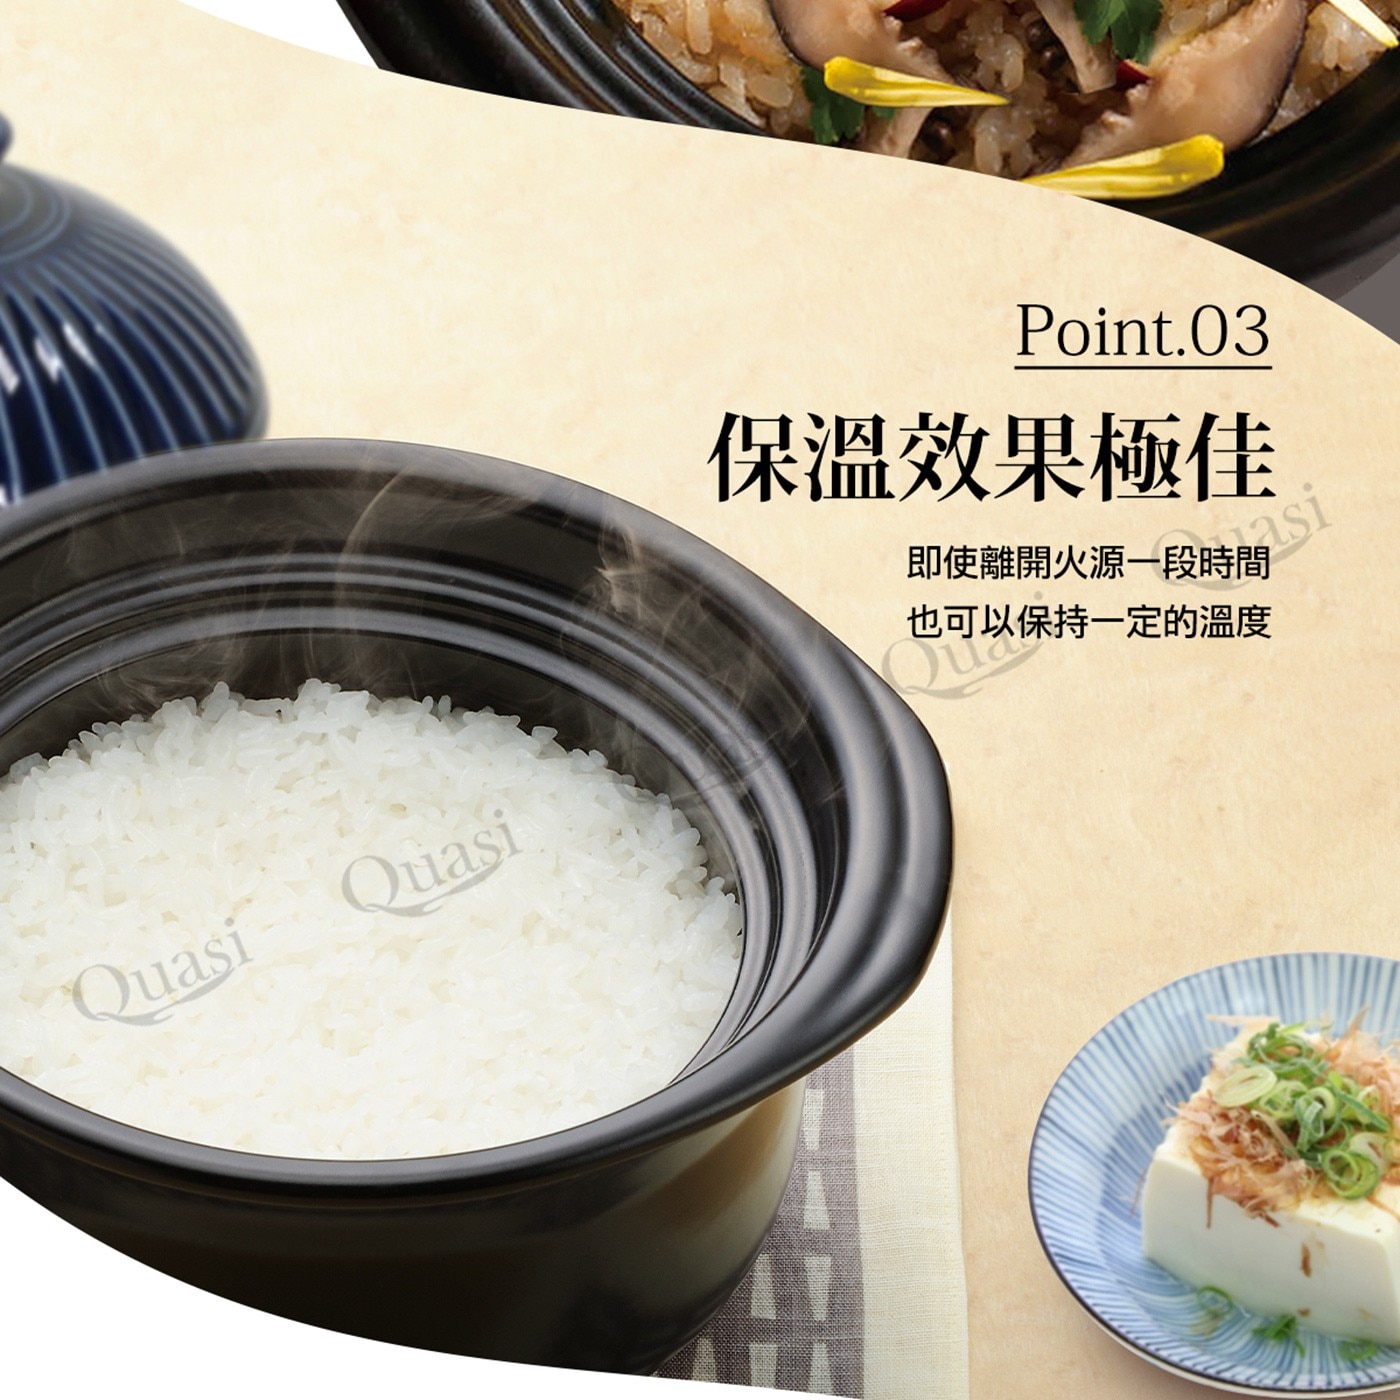 Ginpo日本製Kikka菊花炊飯鍋5合，菊花瓣紋路加鮮黃亮眼上蓋，雙蓋設計，傳熱快、蓄熱佳、節能優，各式炊飯、燉煮料理，簡單一鍋調理一桌美味。